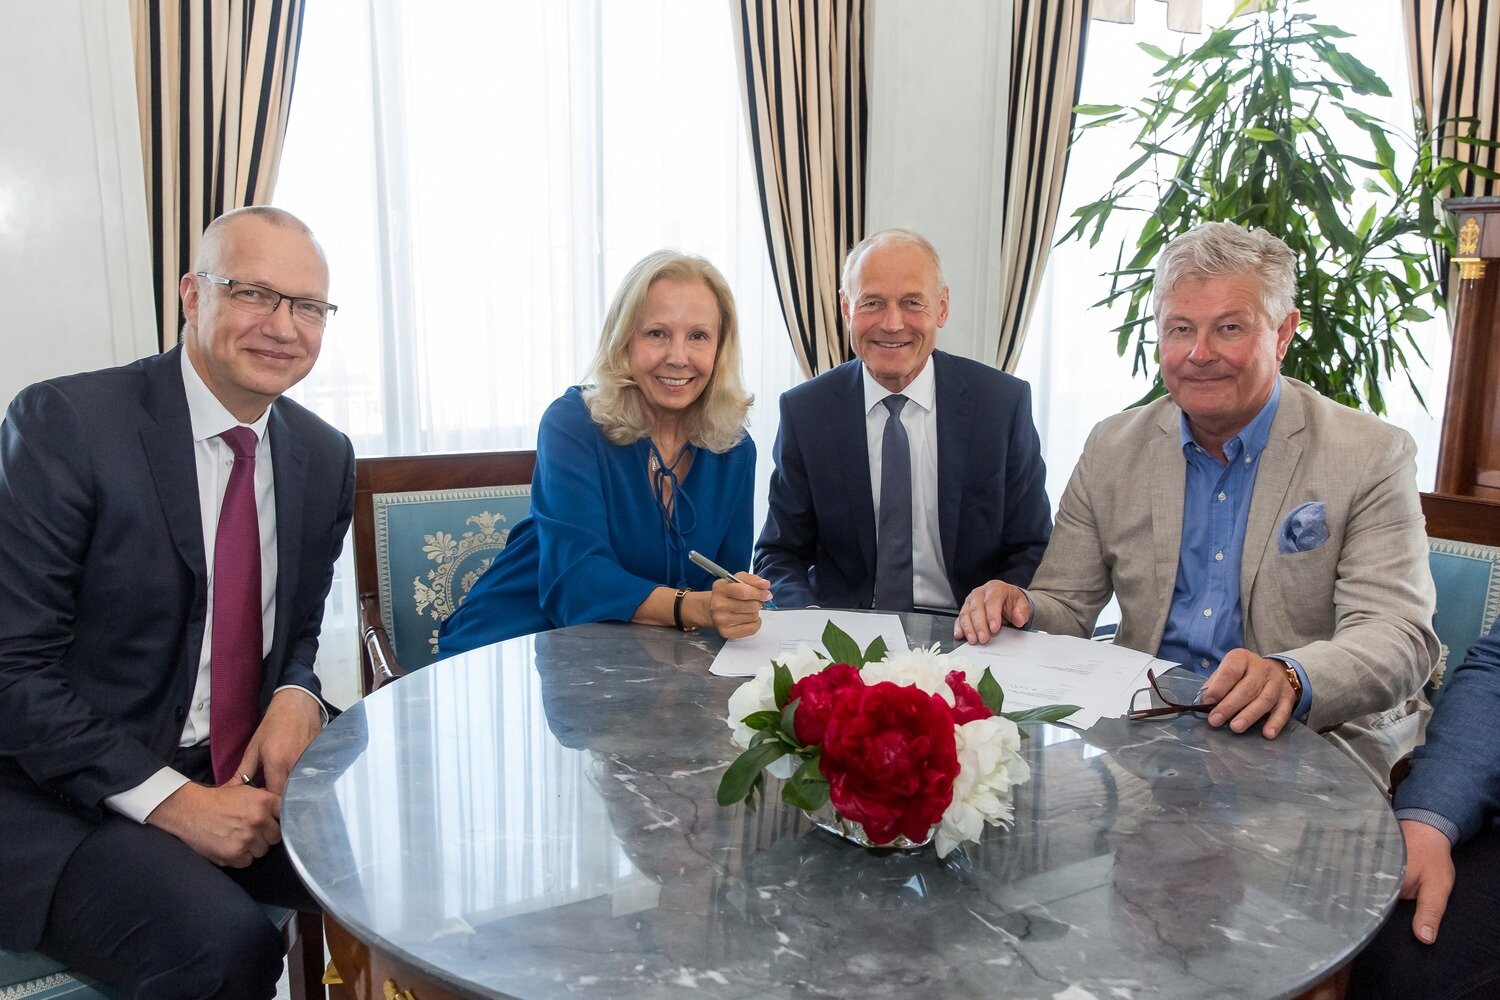 © The contract ist signed, Berlin, May 17, 2019: l. to r. Stephan Possekel, Catherine von Fürstenberg-Dussmann, Dr. Wolfgang Häfele, Eddie Walsh